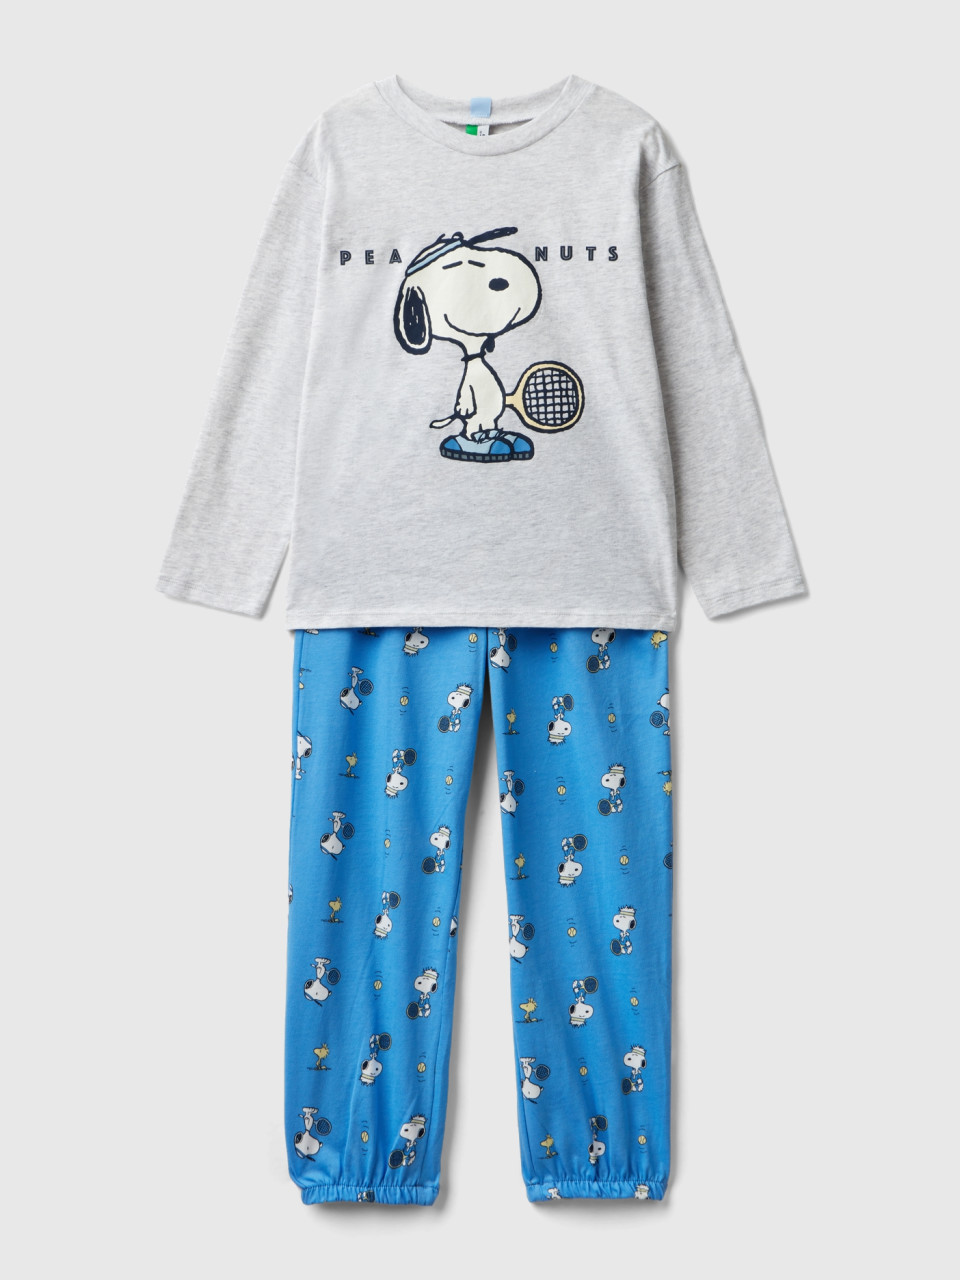 Benetton, Lightweight Snoopy ©peanuts Pyjamas, Light Gray, Kids